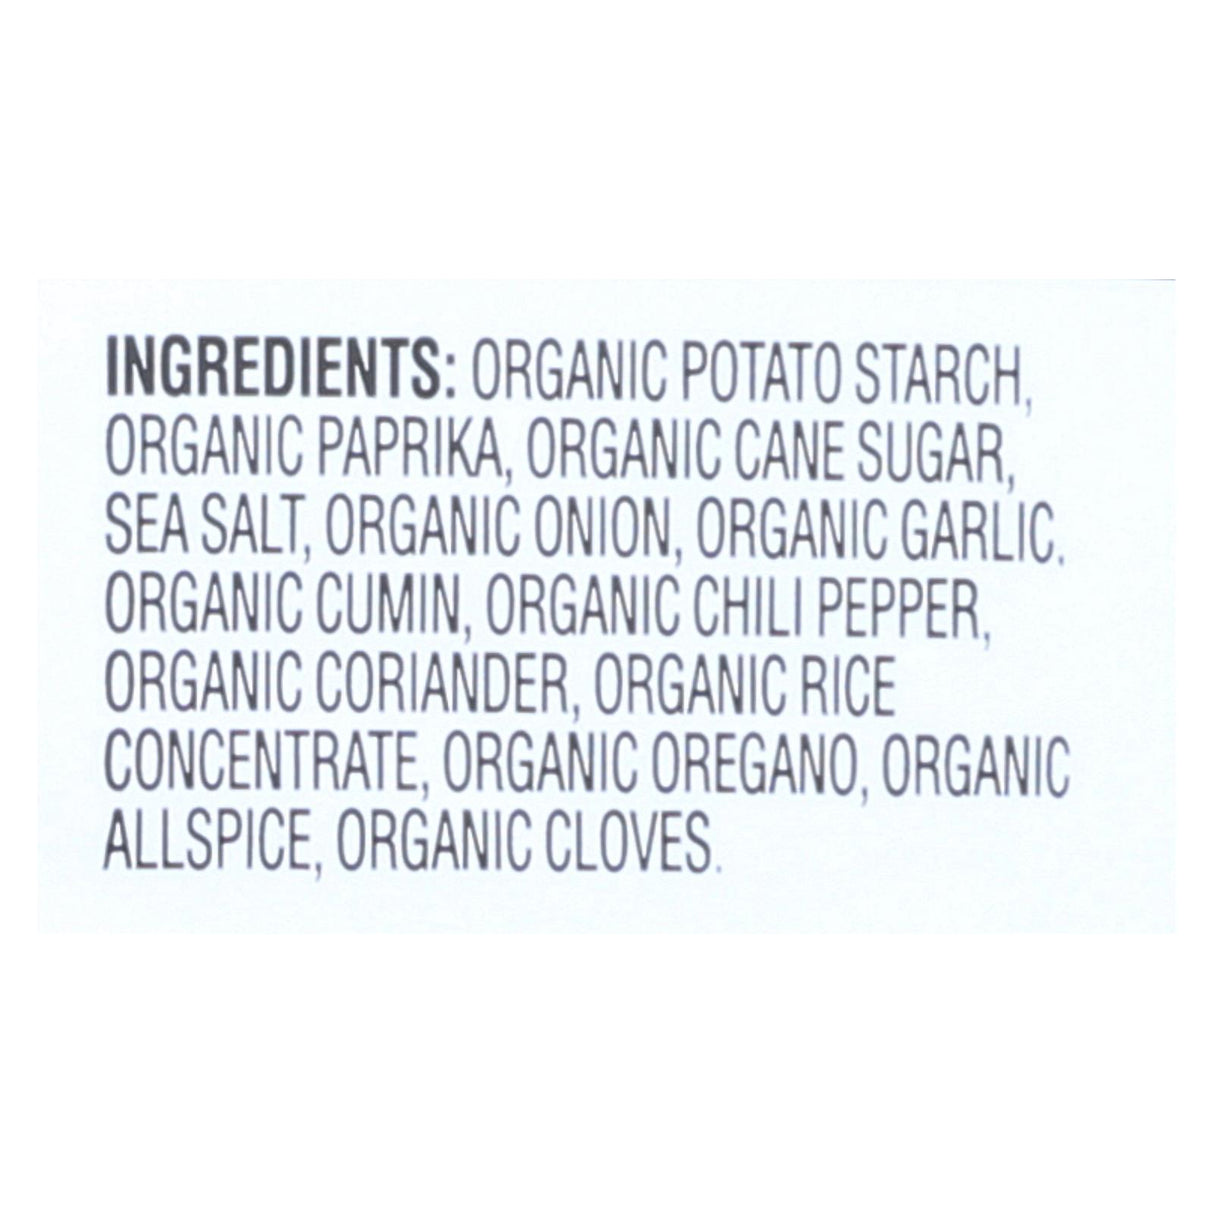 Simply Organic Mild Chili Seasoning Mix, 1 oz, Case of 12 - Cozy Farm 